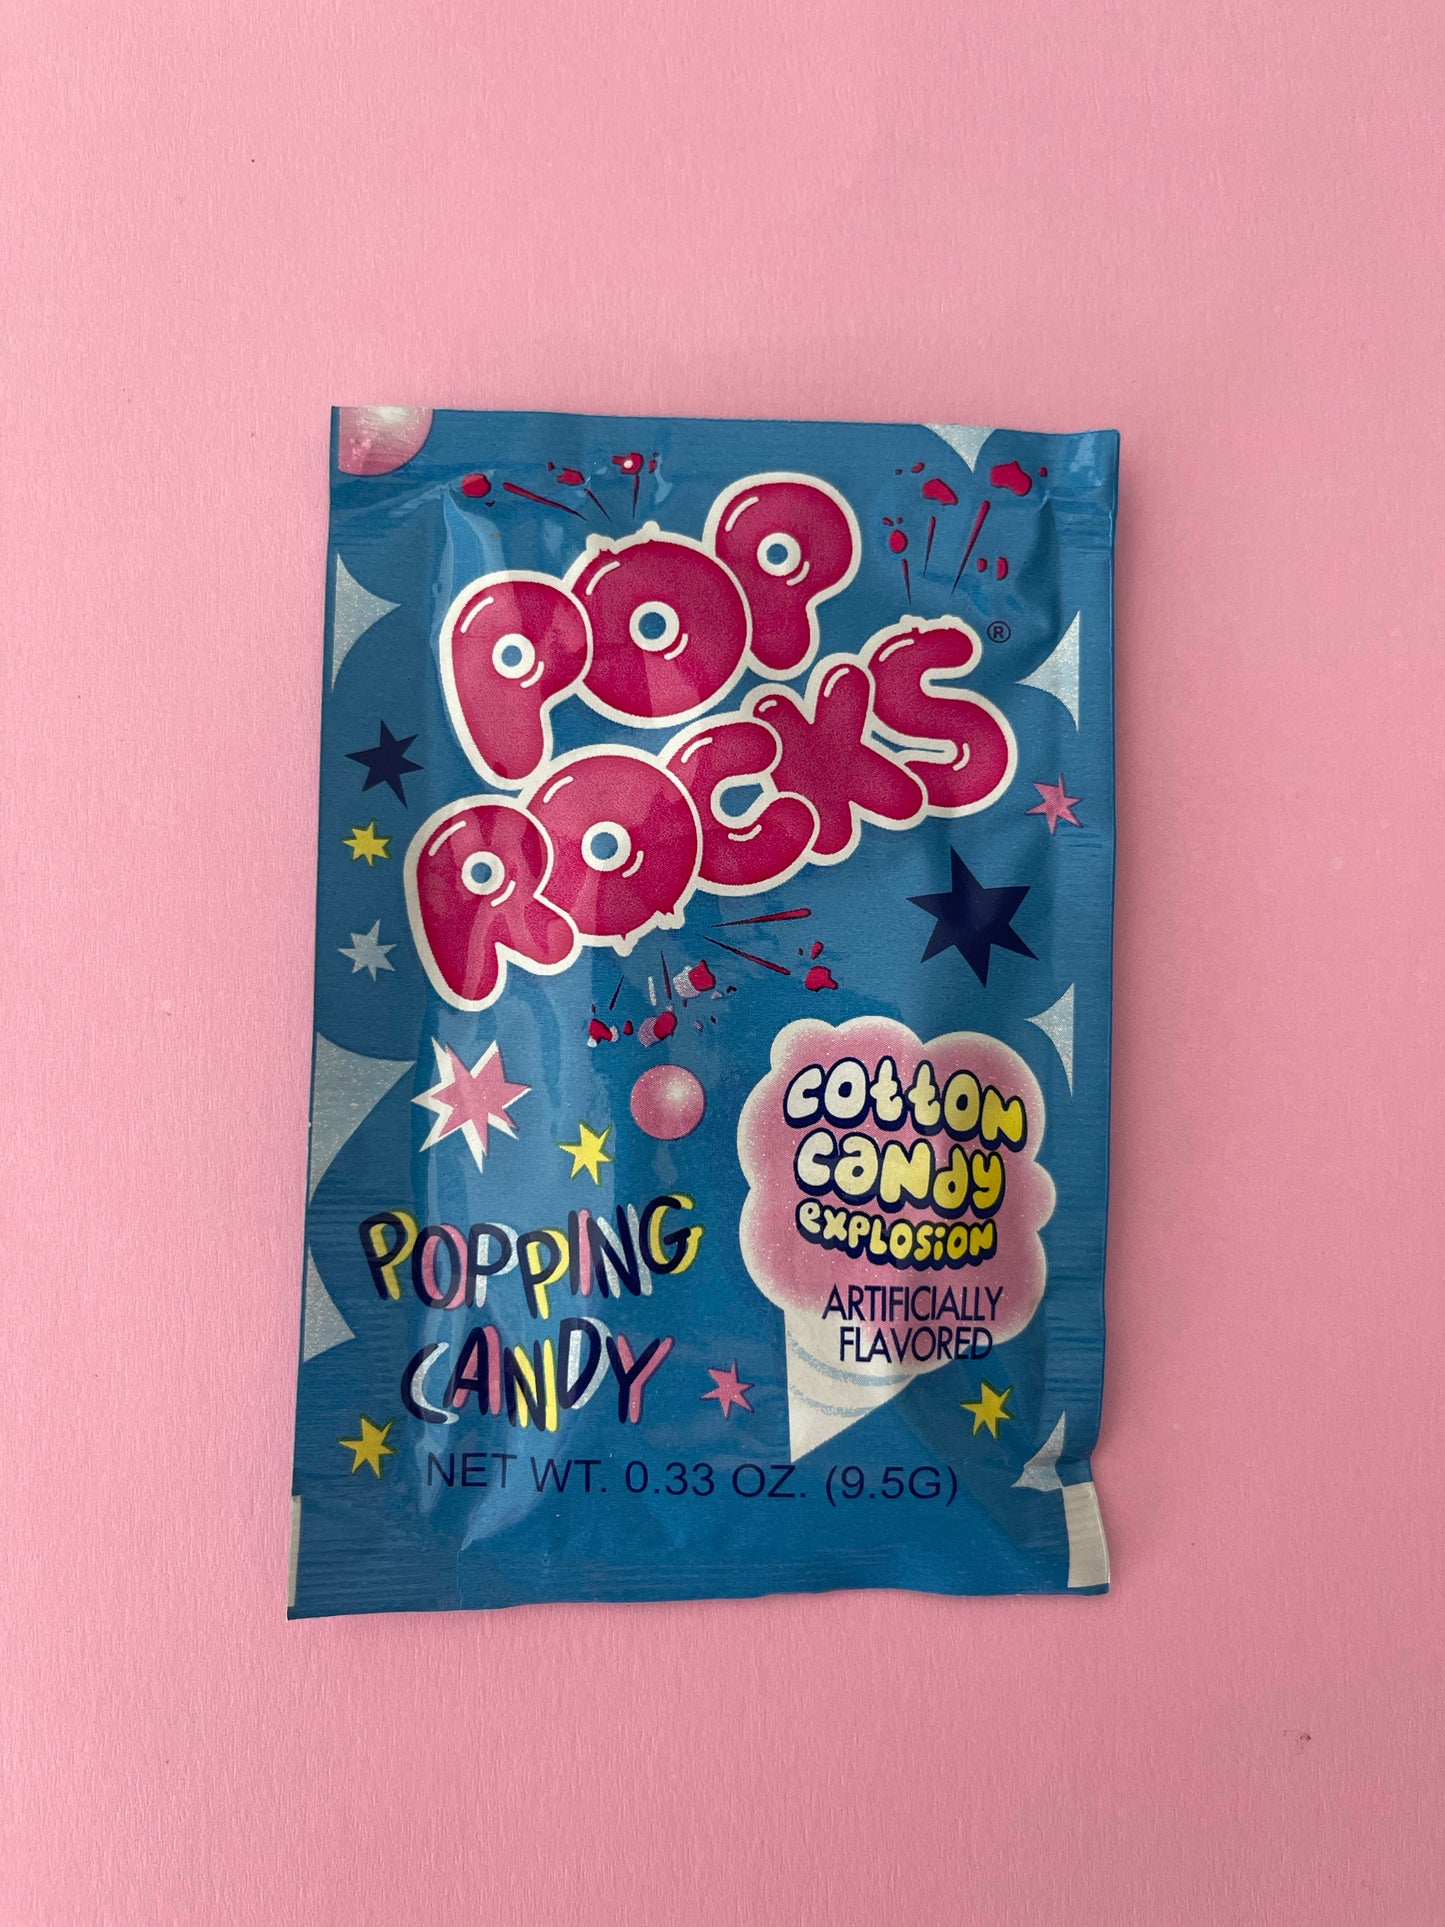 Pop Rocks - cotton candy explosion